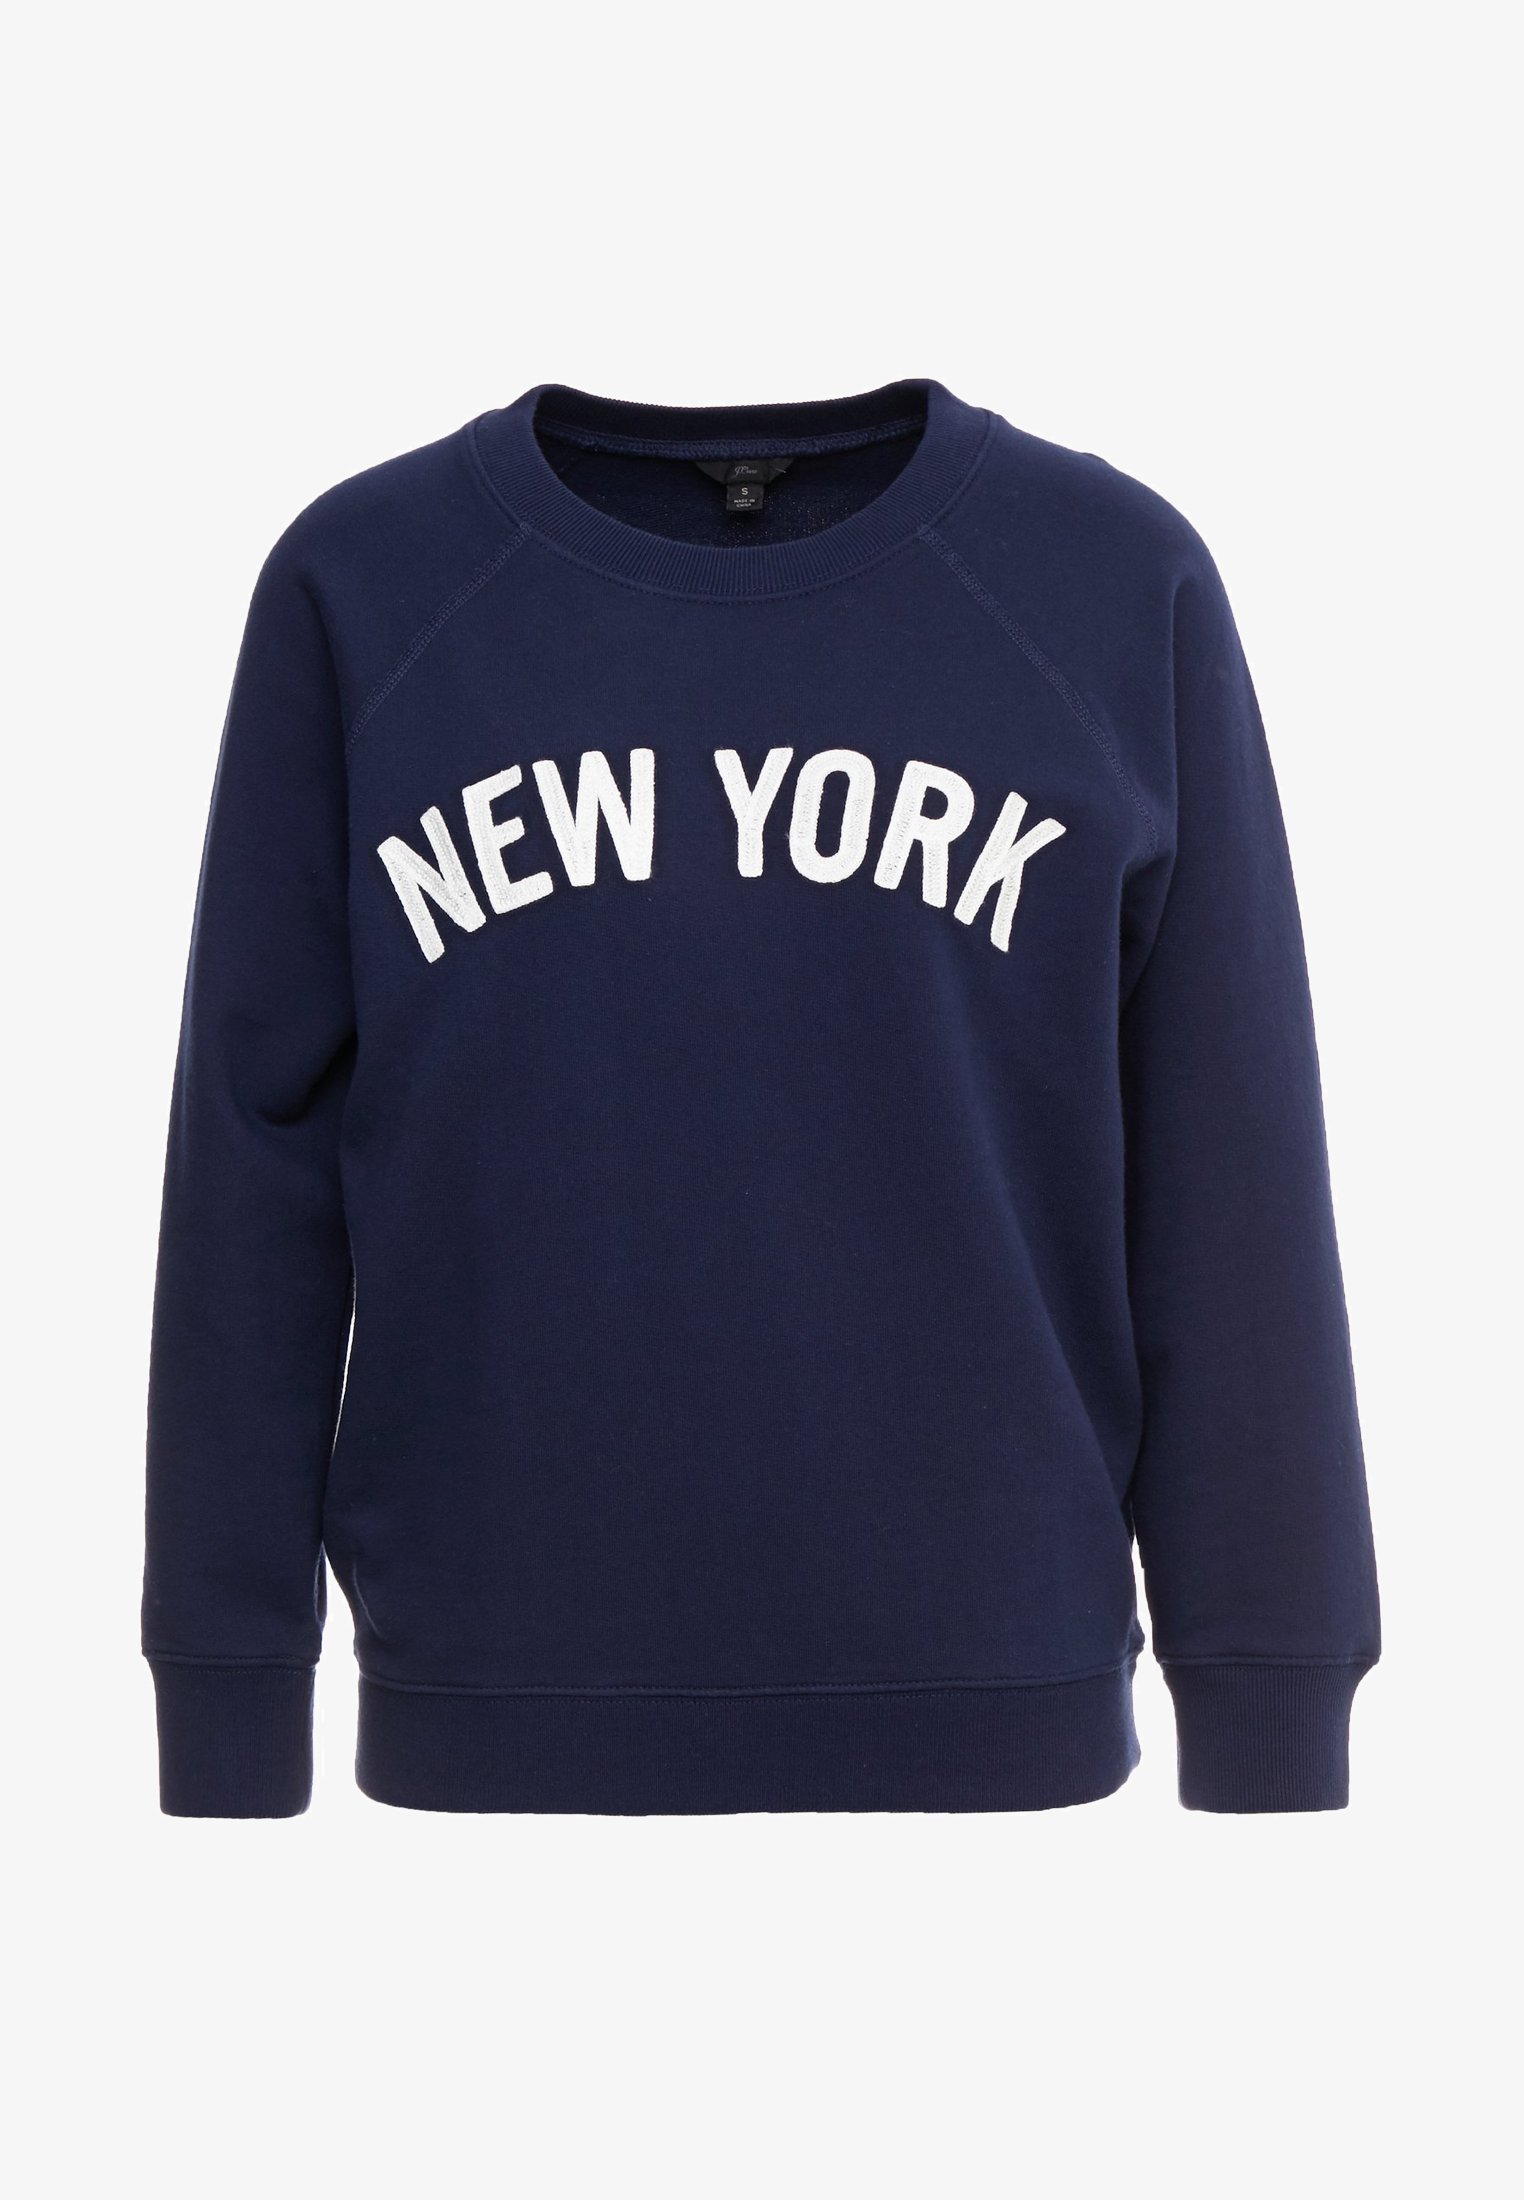 New York Sweatshirt Print by Clothenvy